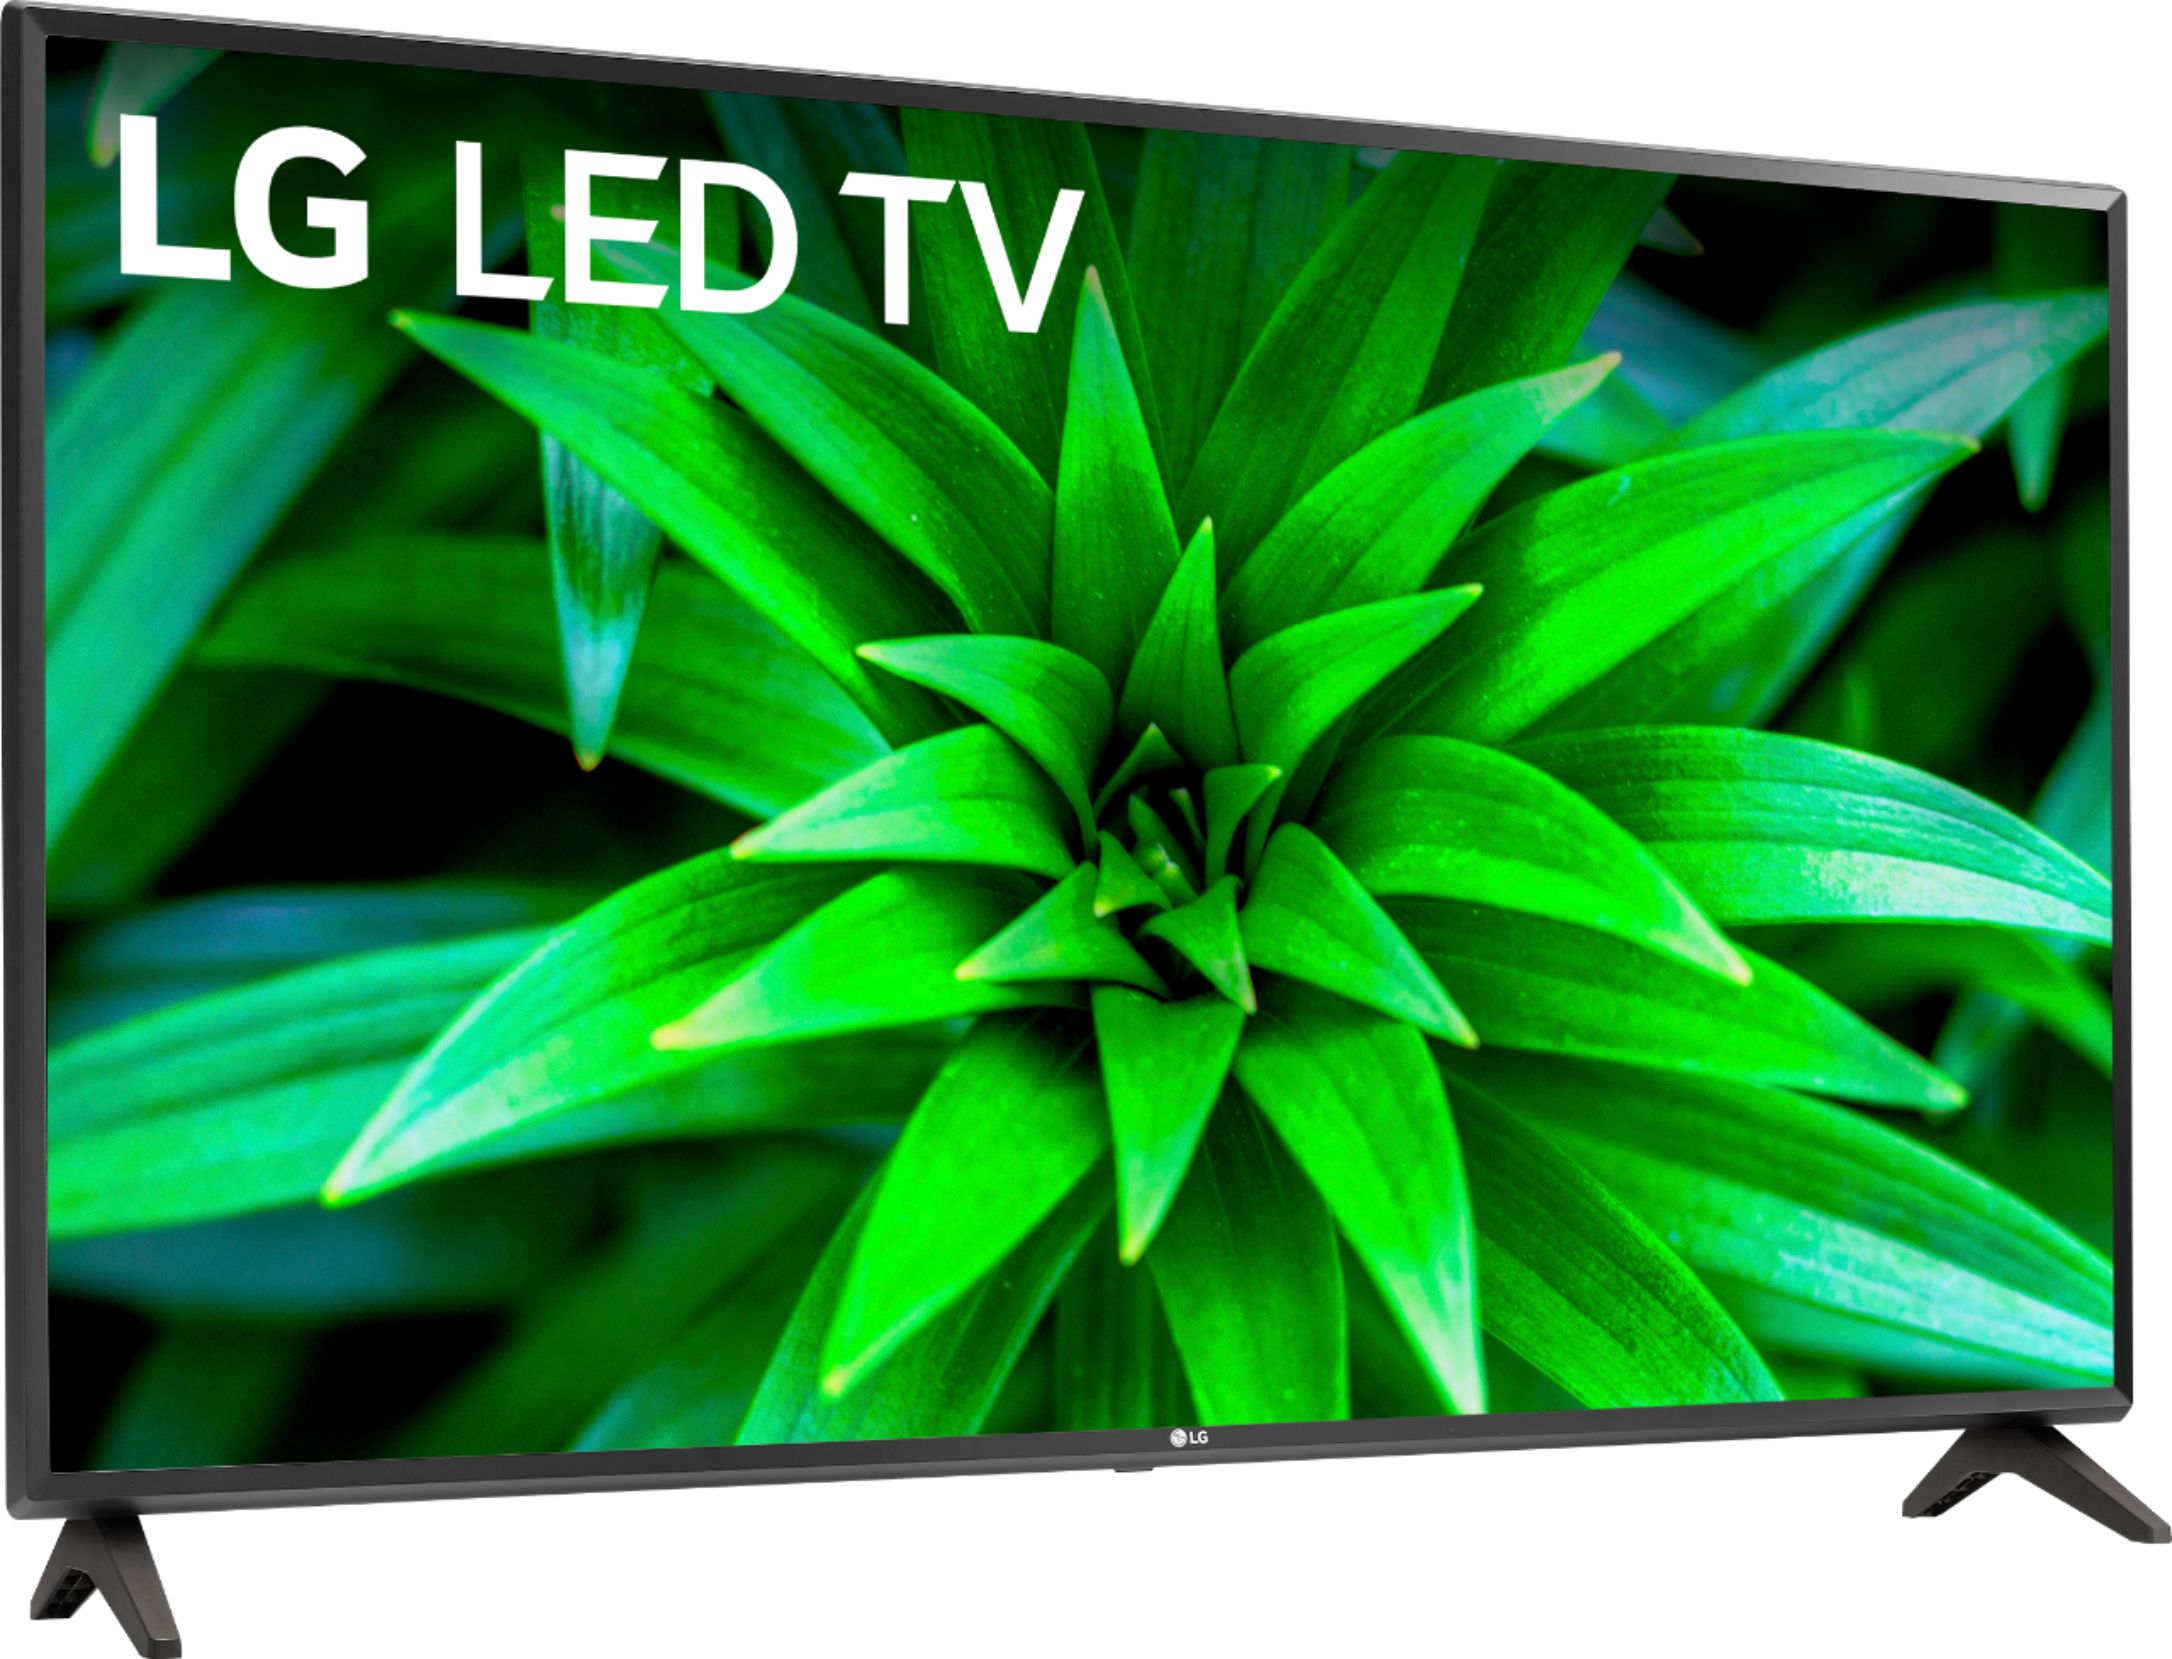 TV LG Smart 43led full hd android tv